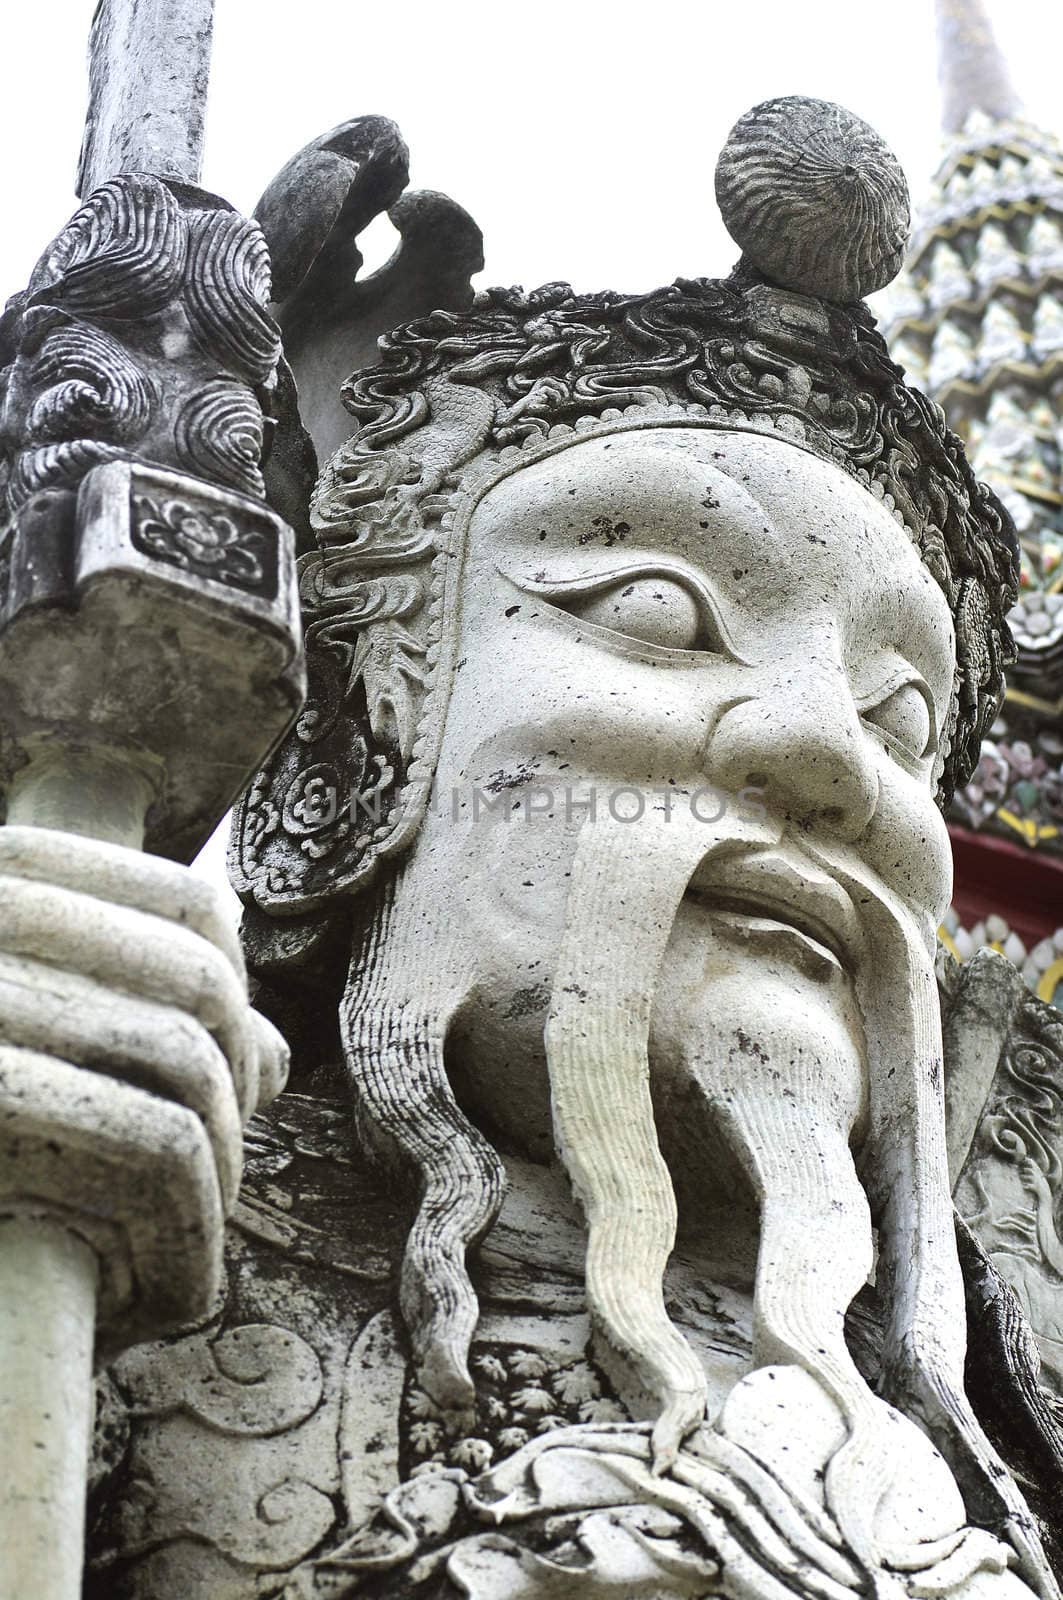 gaardian statue in thai temple by BeeManGuitarRa